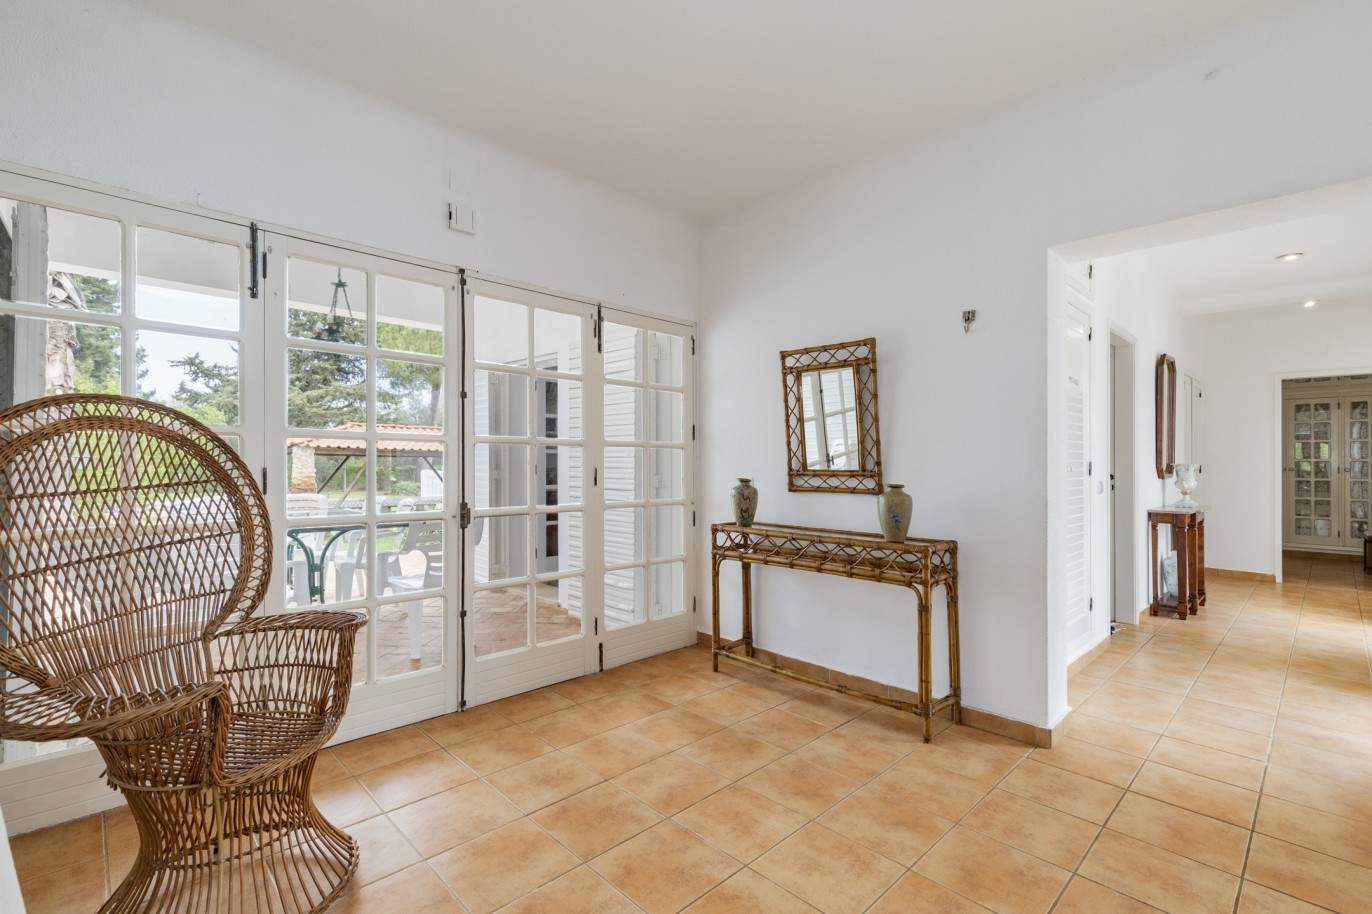 Rustic 5 bedrooms villa with pool, for sale in Pêra, Silves, Algarve_201837